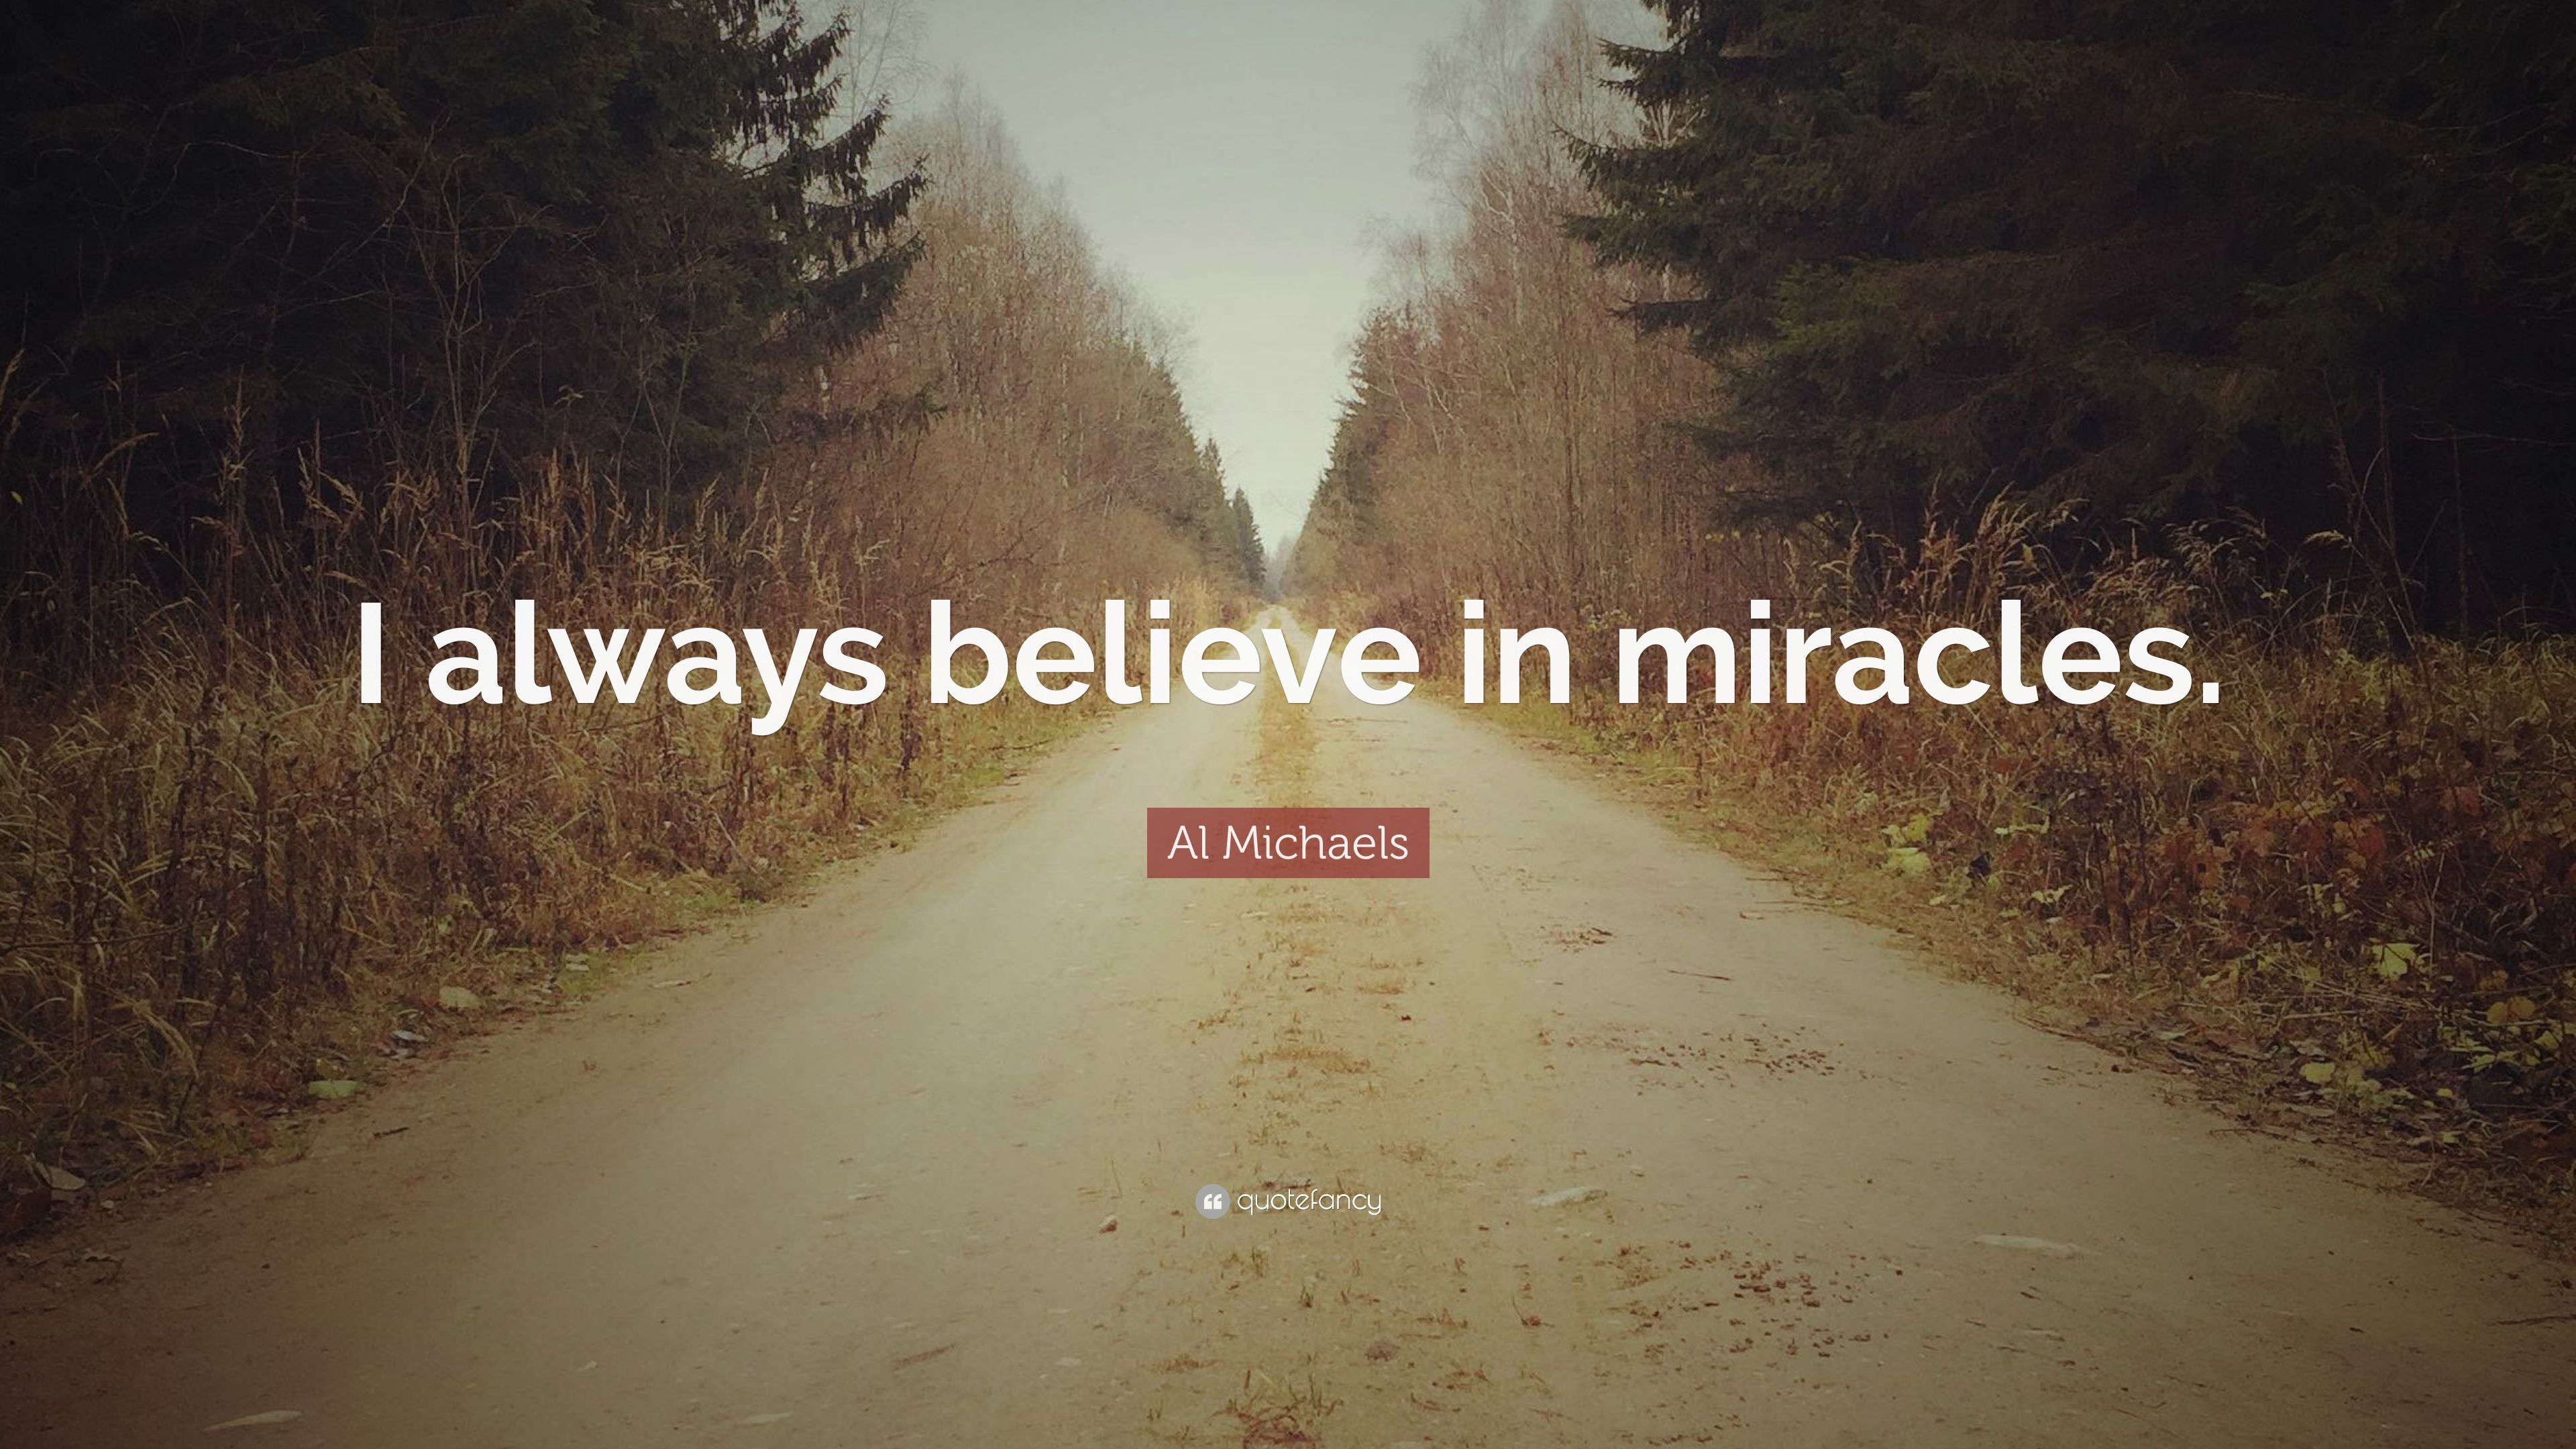 Al Michaels Quote: “I always believe in miracles.” (12 wallpaper)